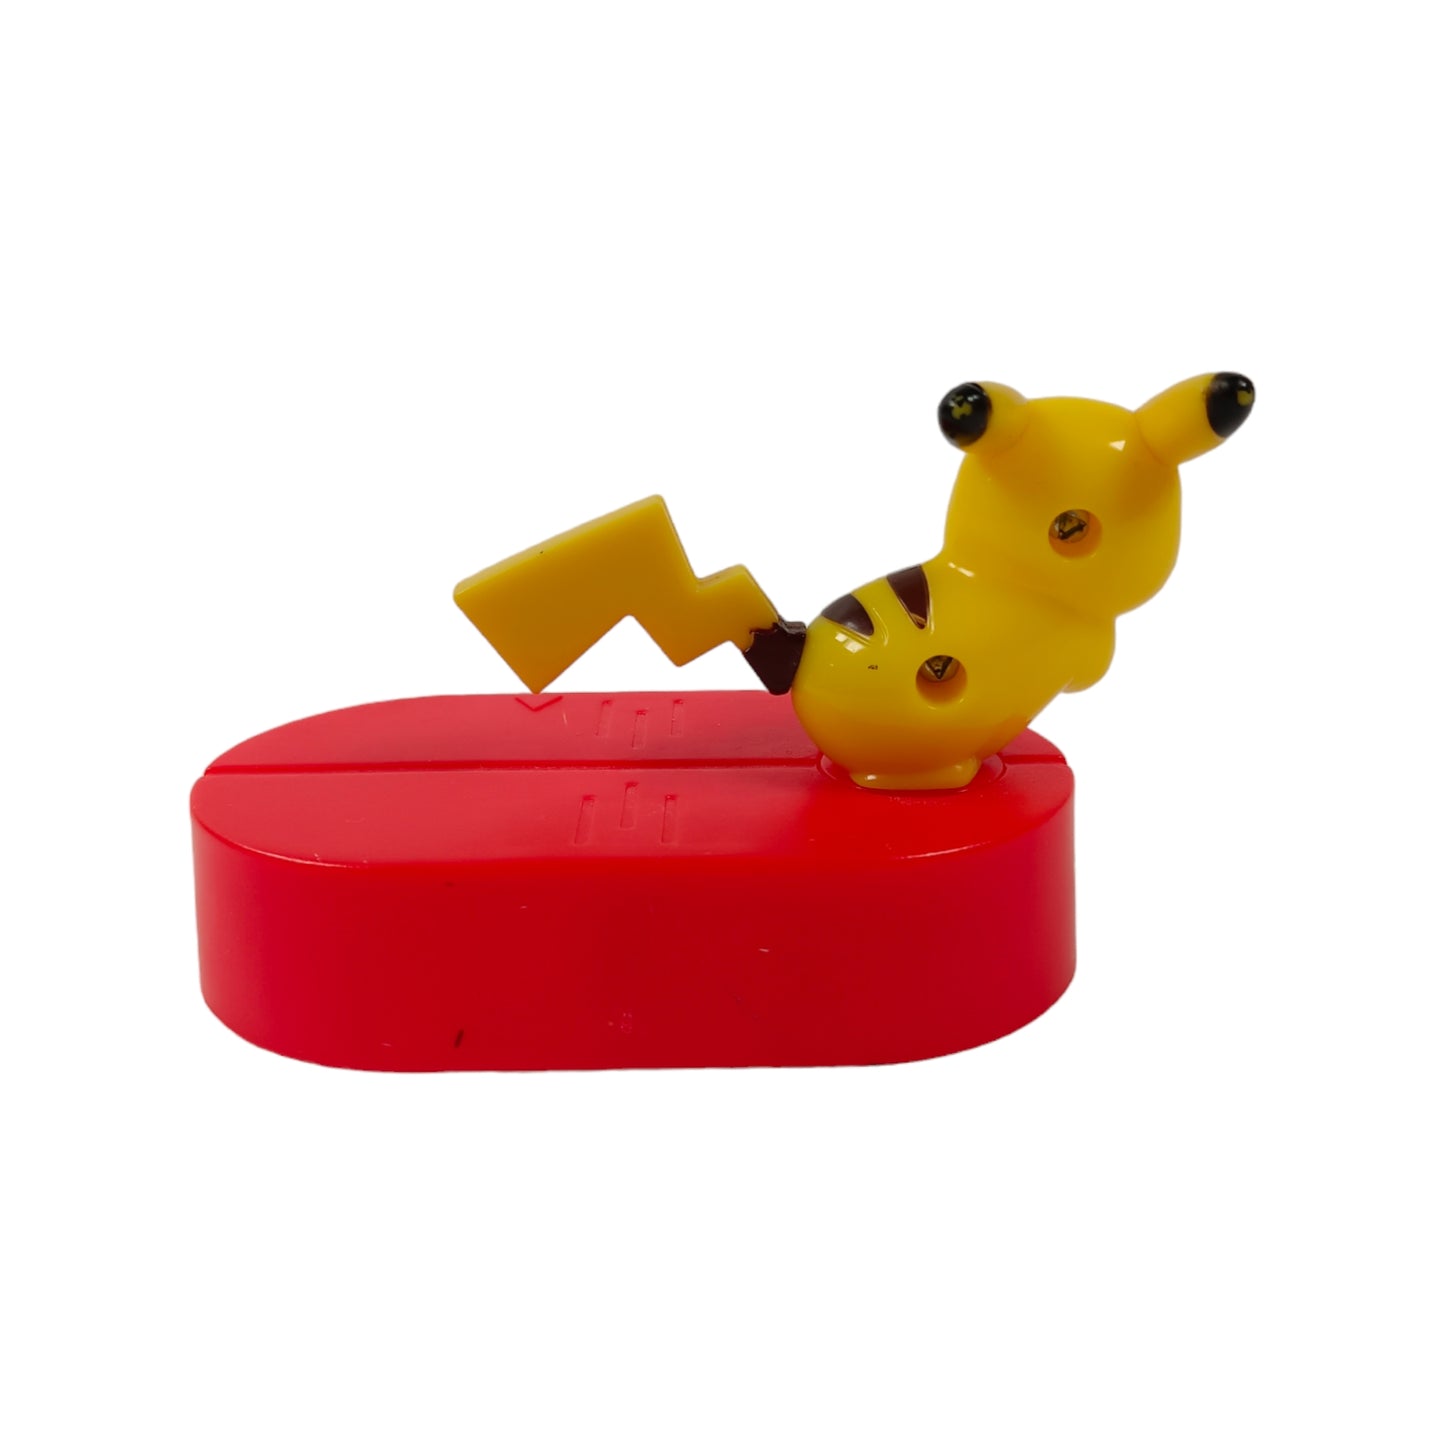 Jouet Pikachu McDonald's - Figurine avec Mécanisme de Frappe